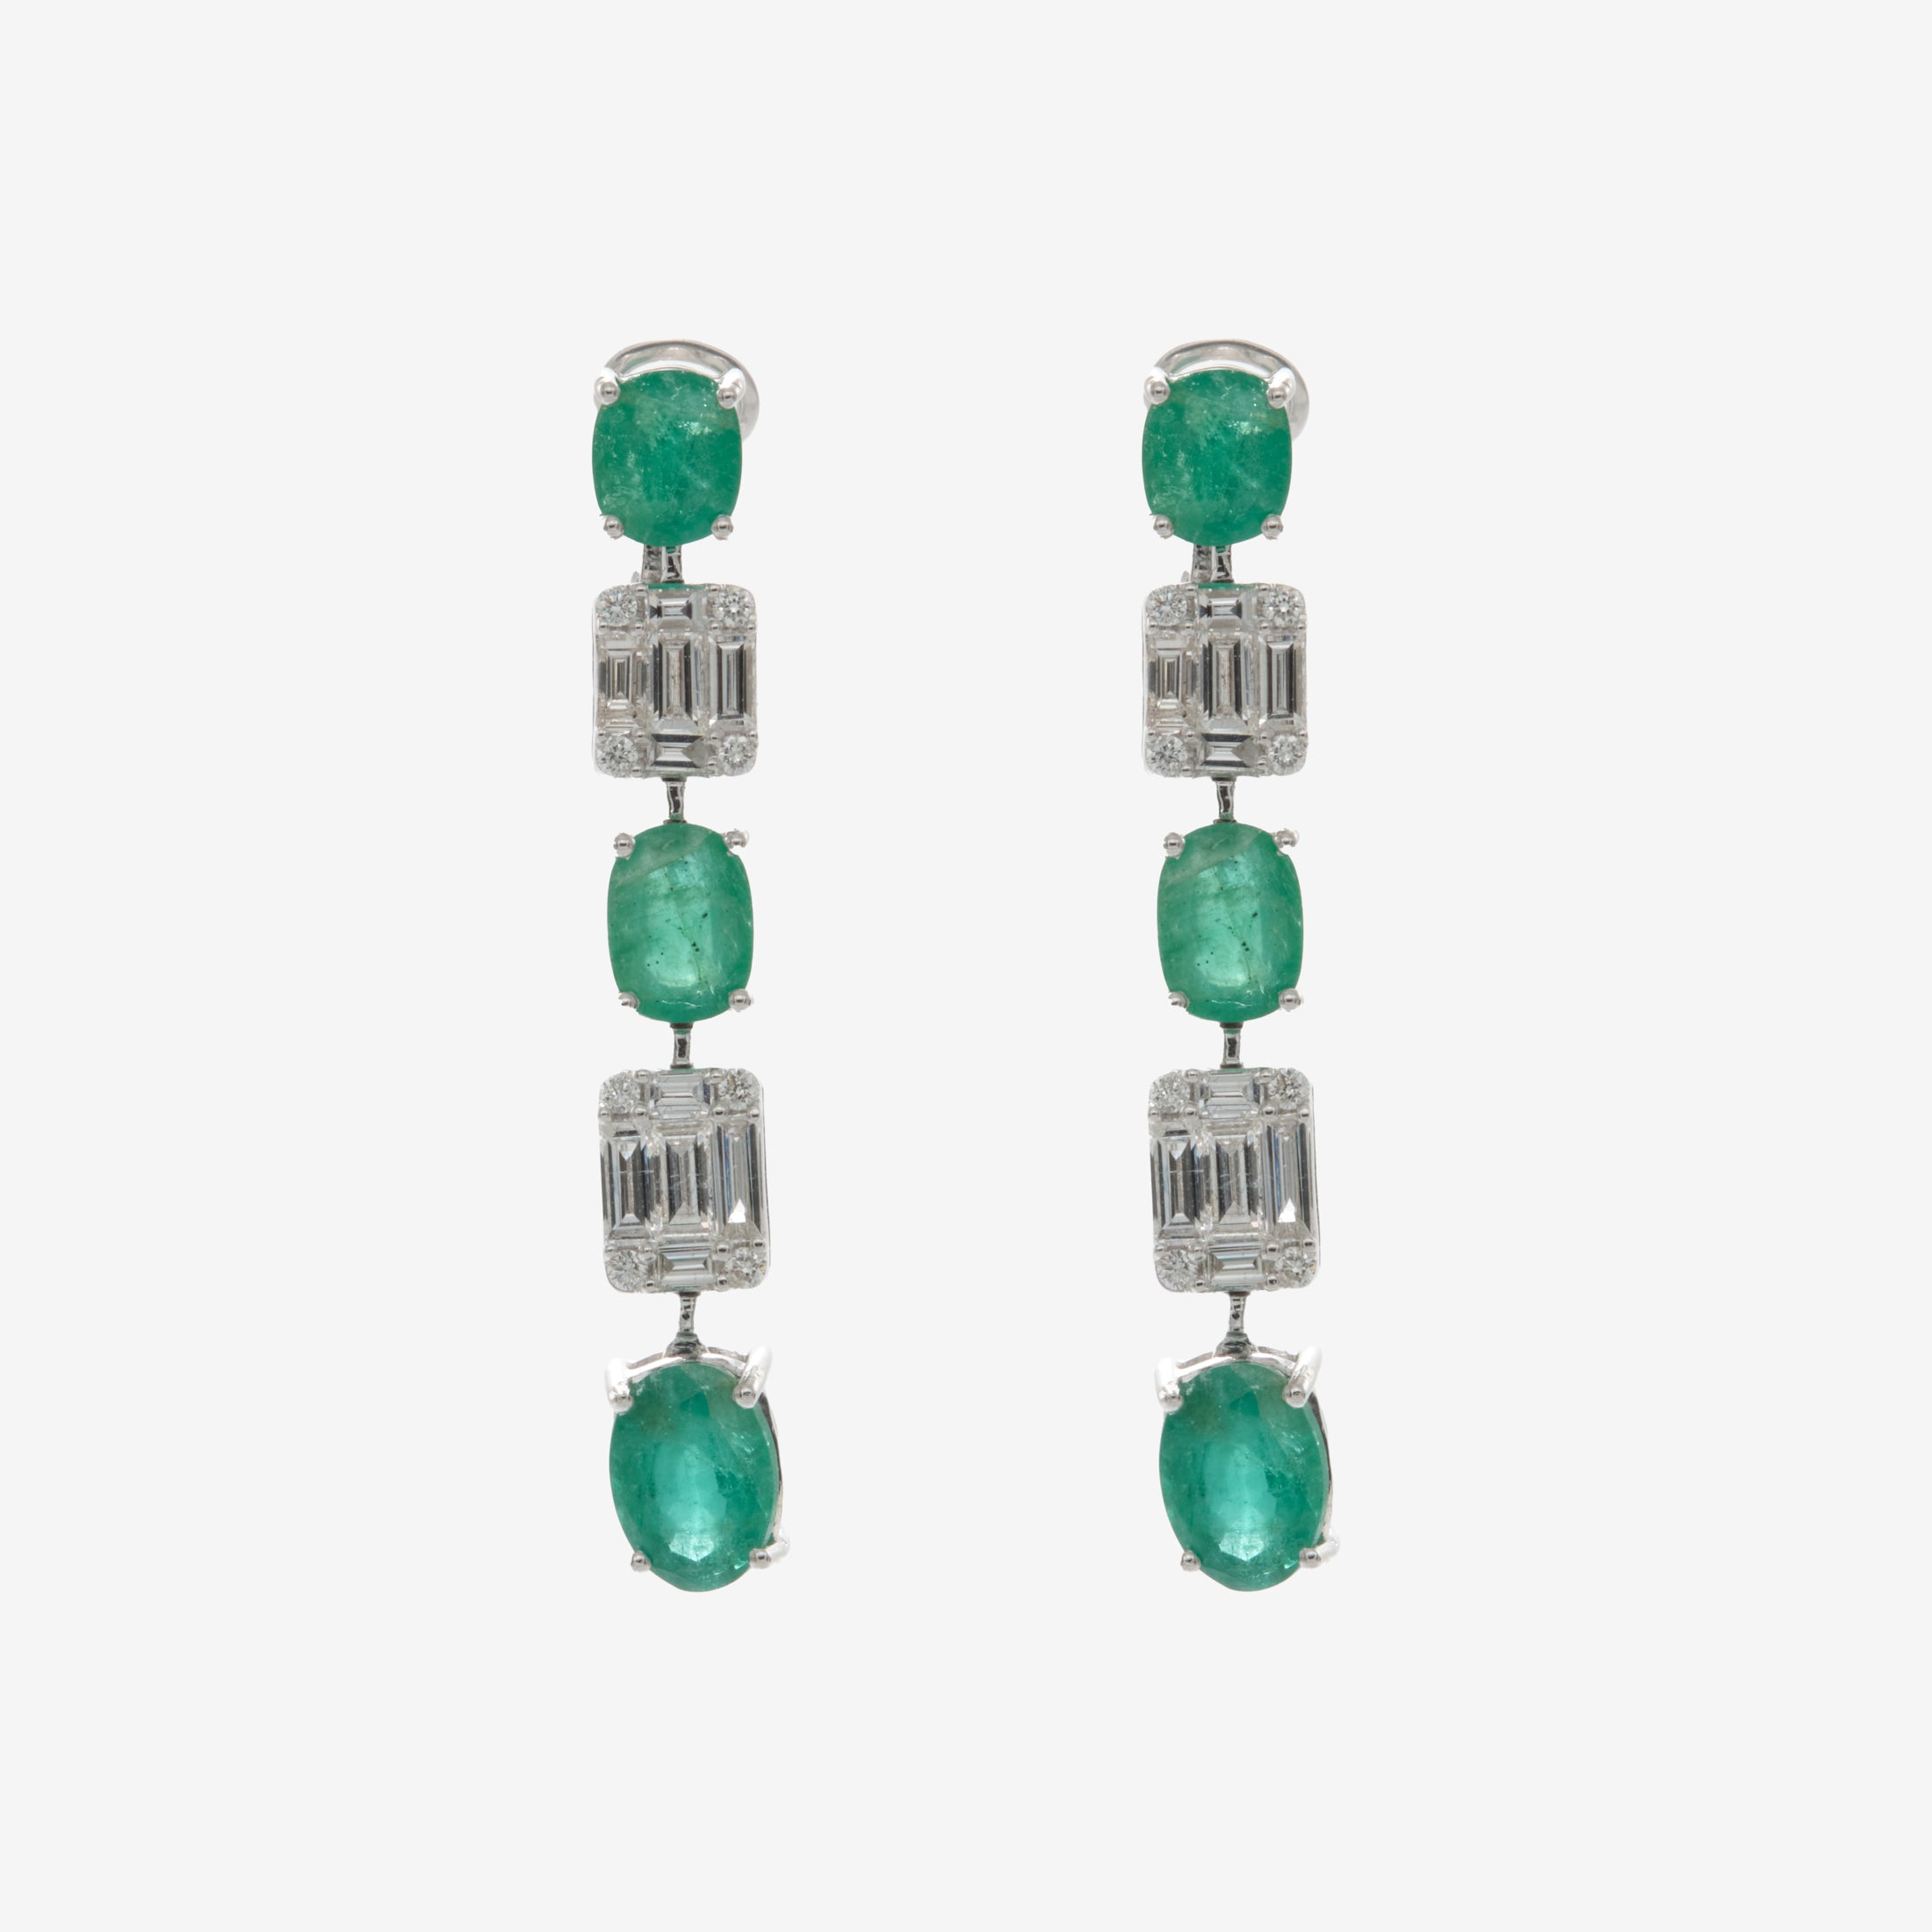 Utopia earrings with emeralds and diamonds